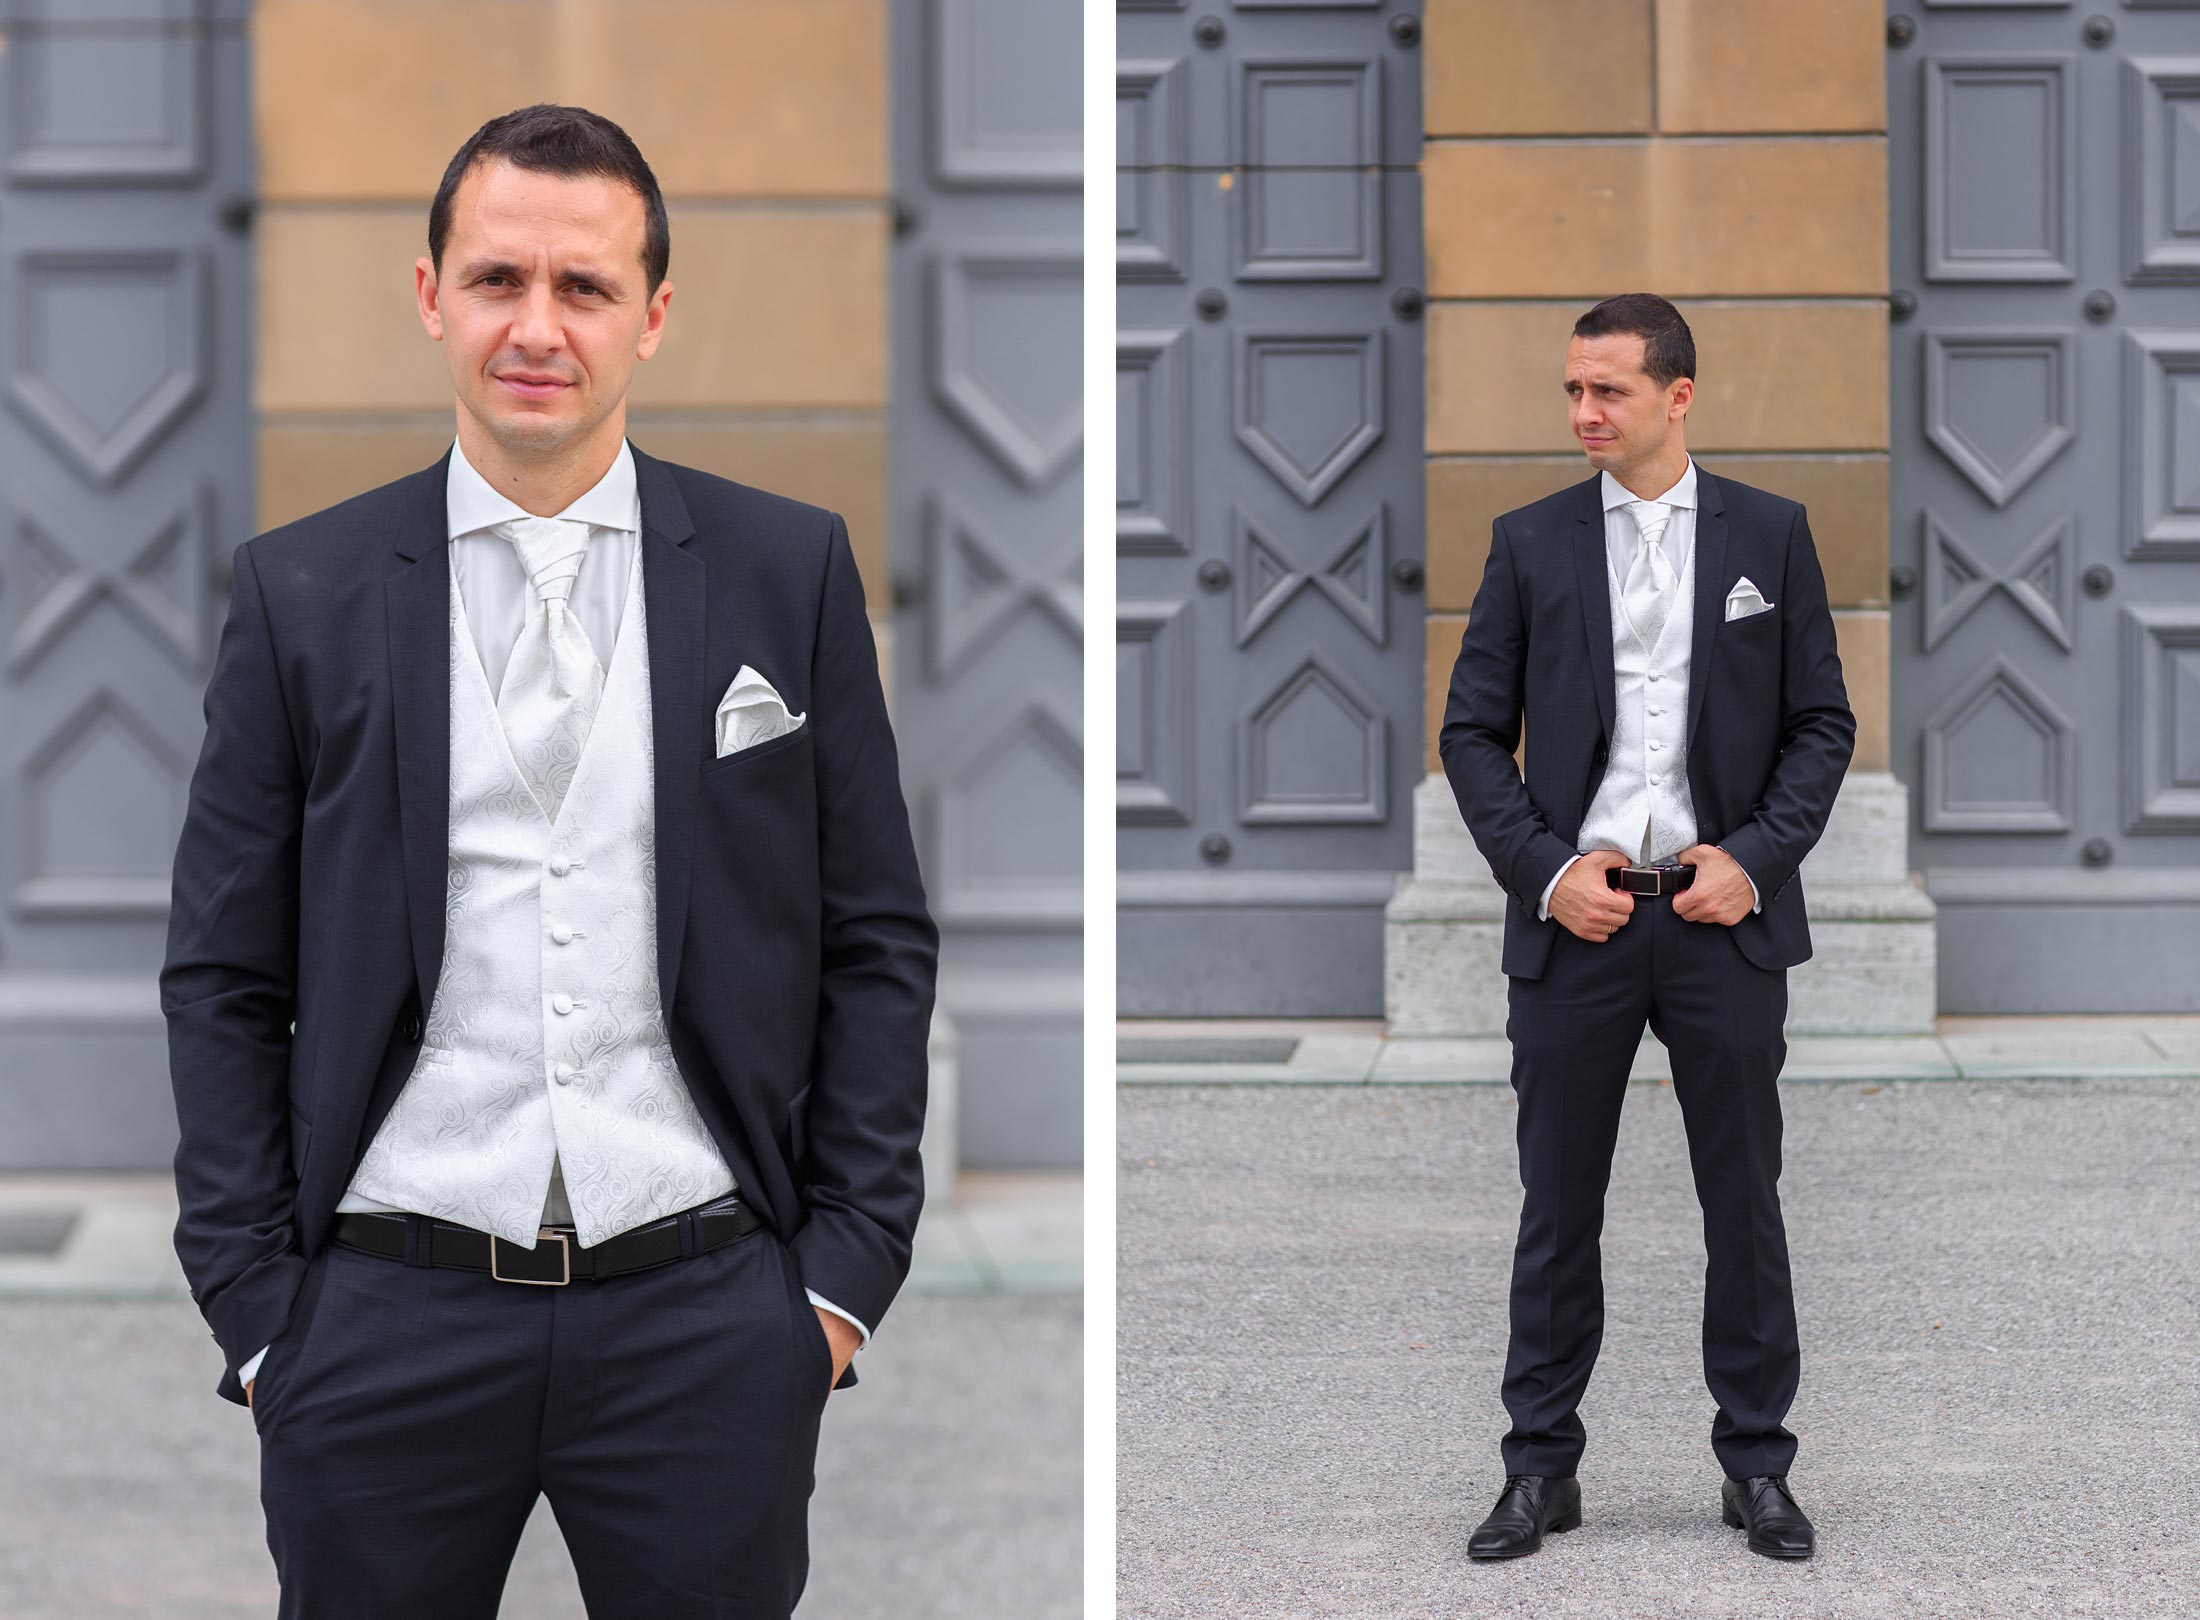 Professional photographer Munich - wedding guest dresses